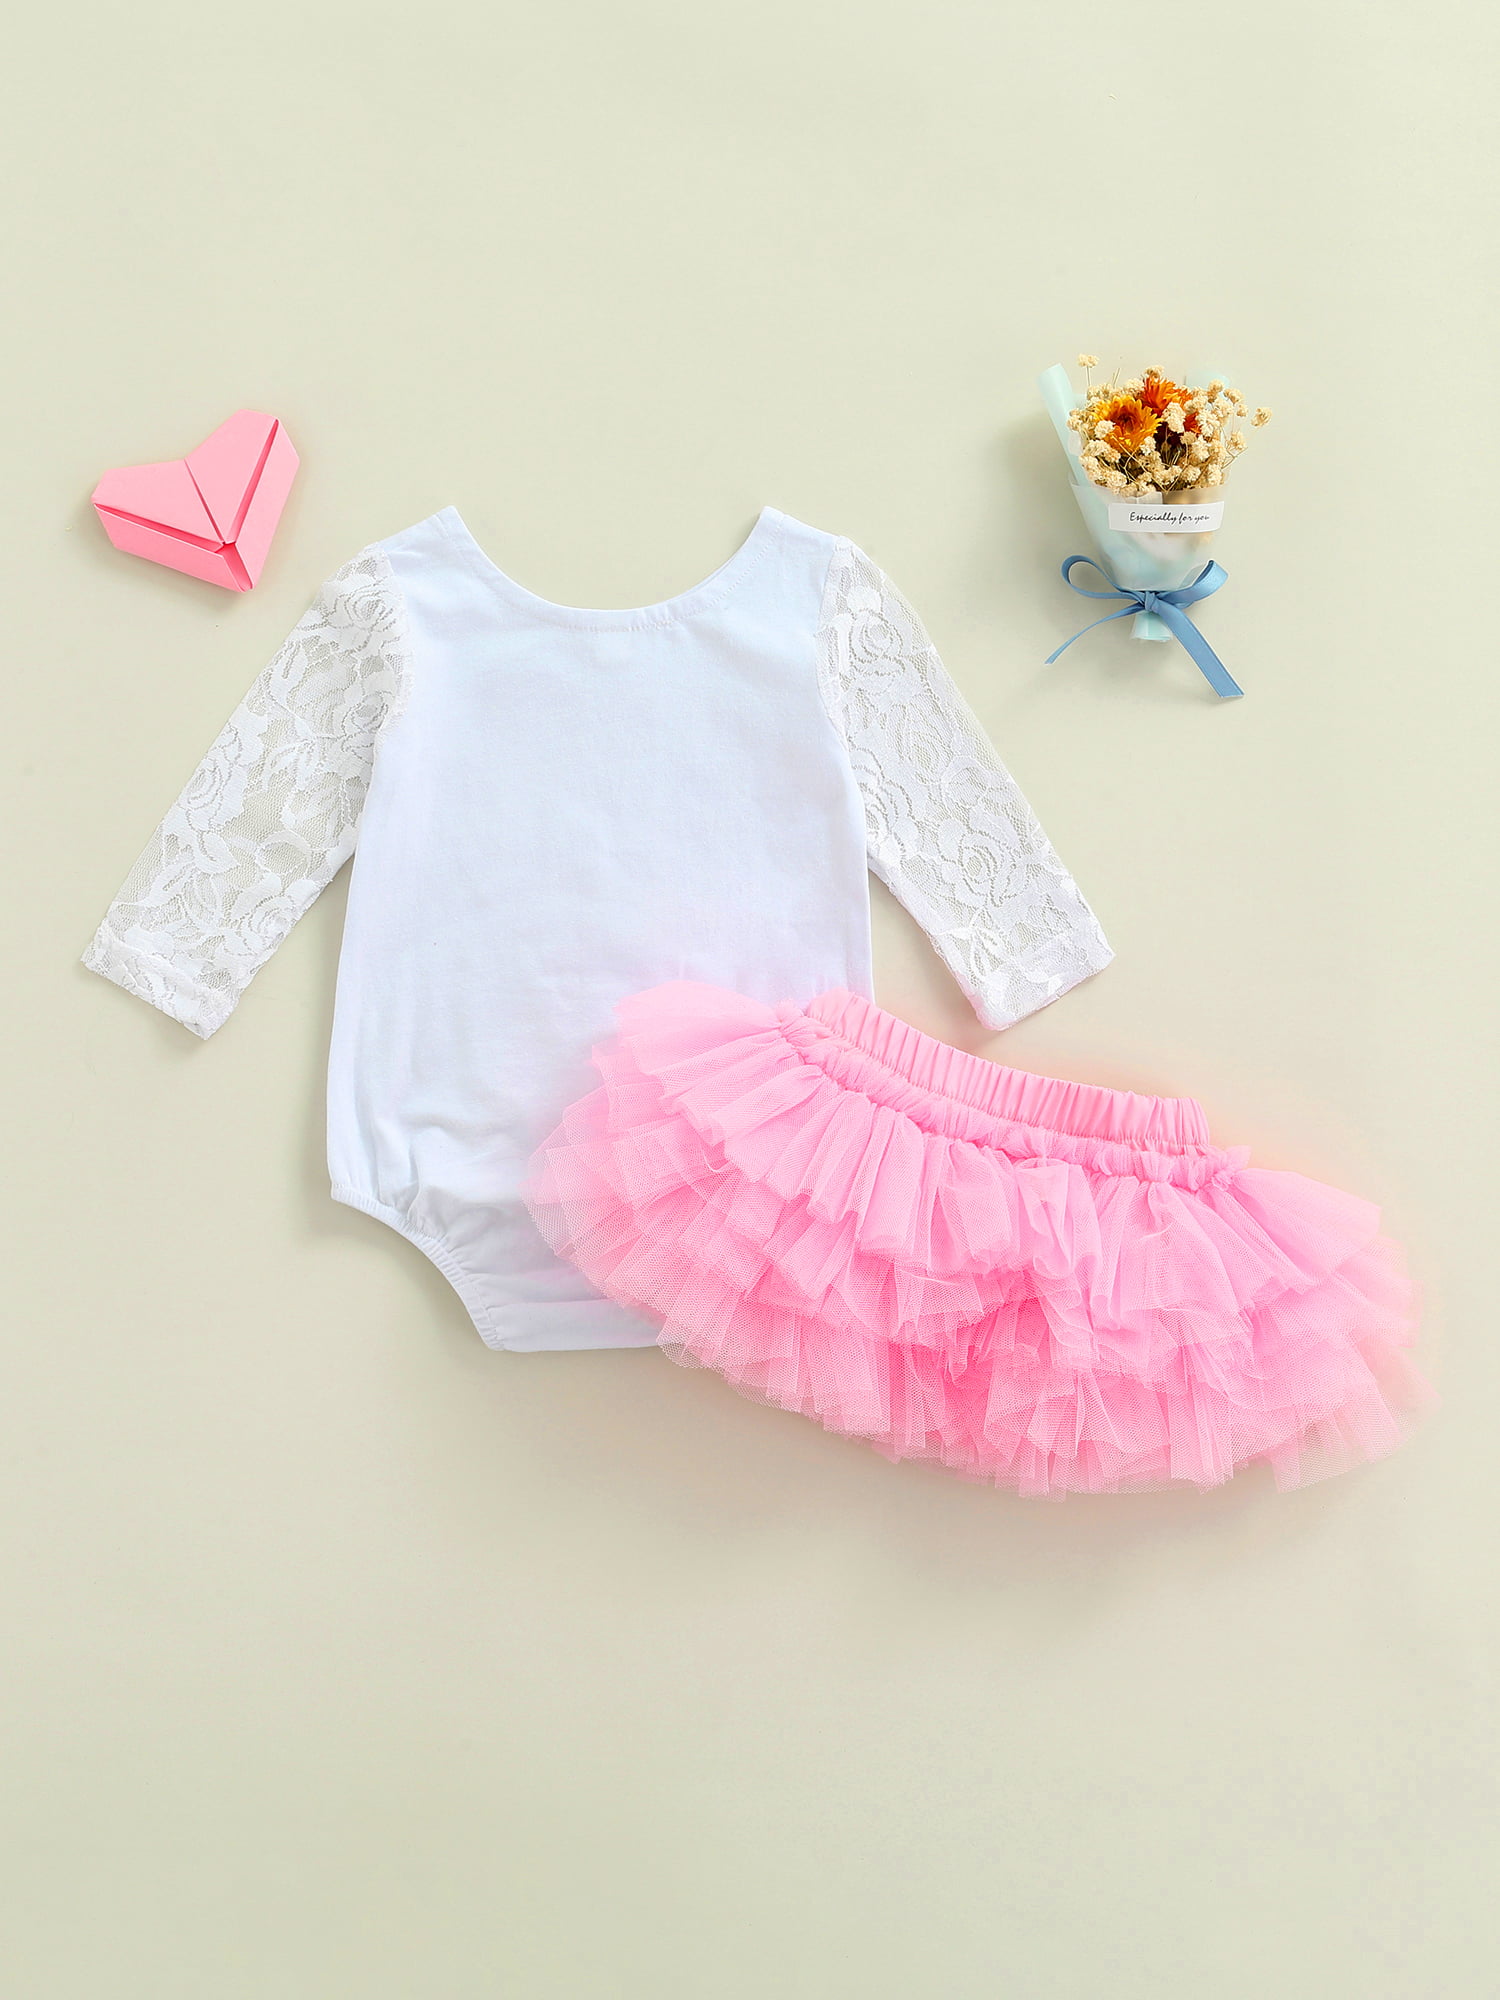 Mialoley Baby Girls Clothes Set High Neck Bubble Long Sleeve Top +